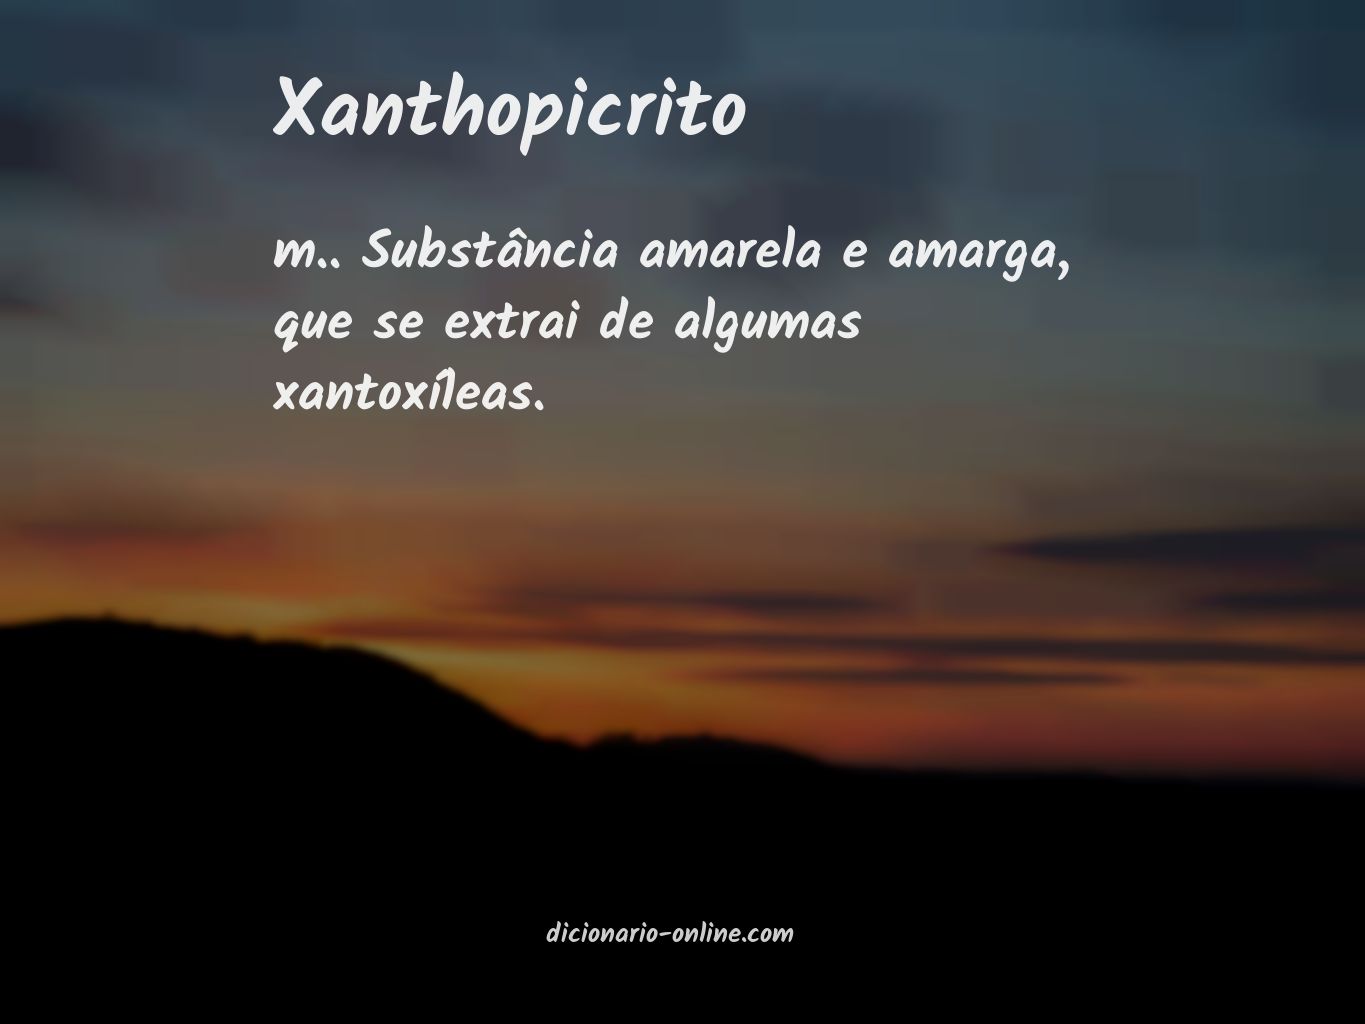 Significado de xanthopicrito